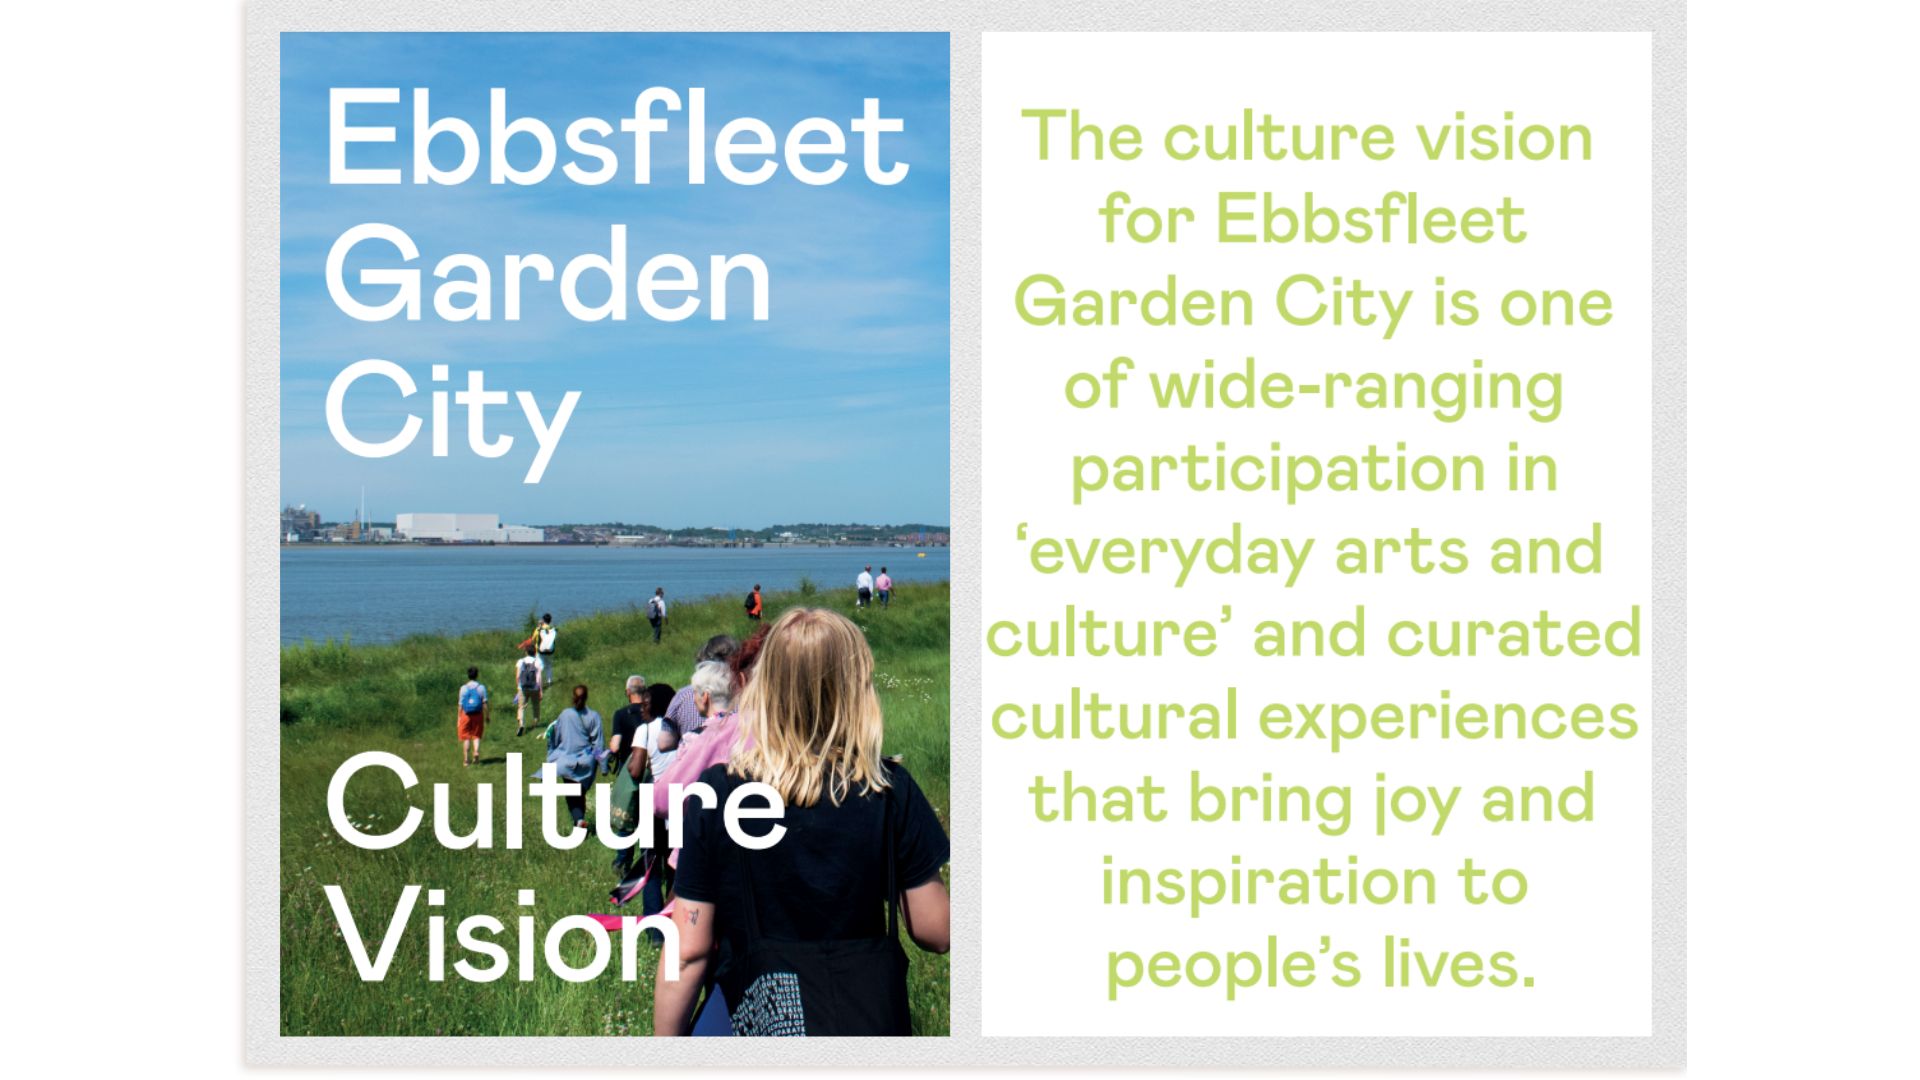 Ebbsfleet Culture Vision